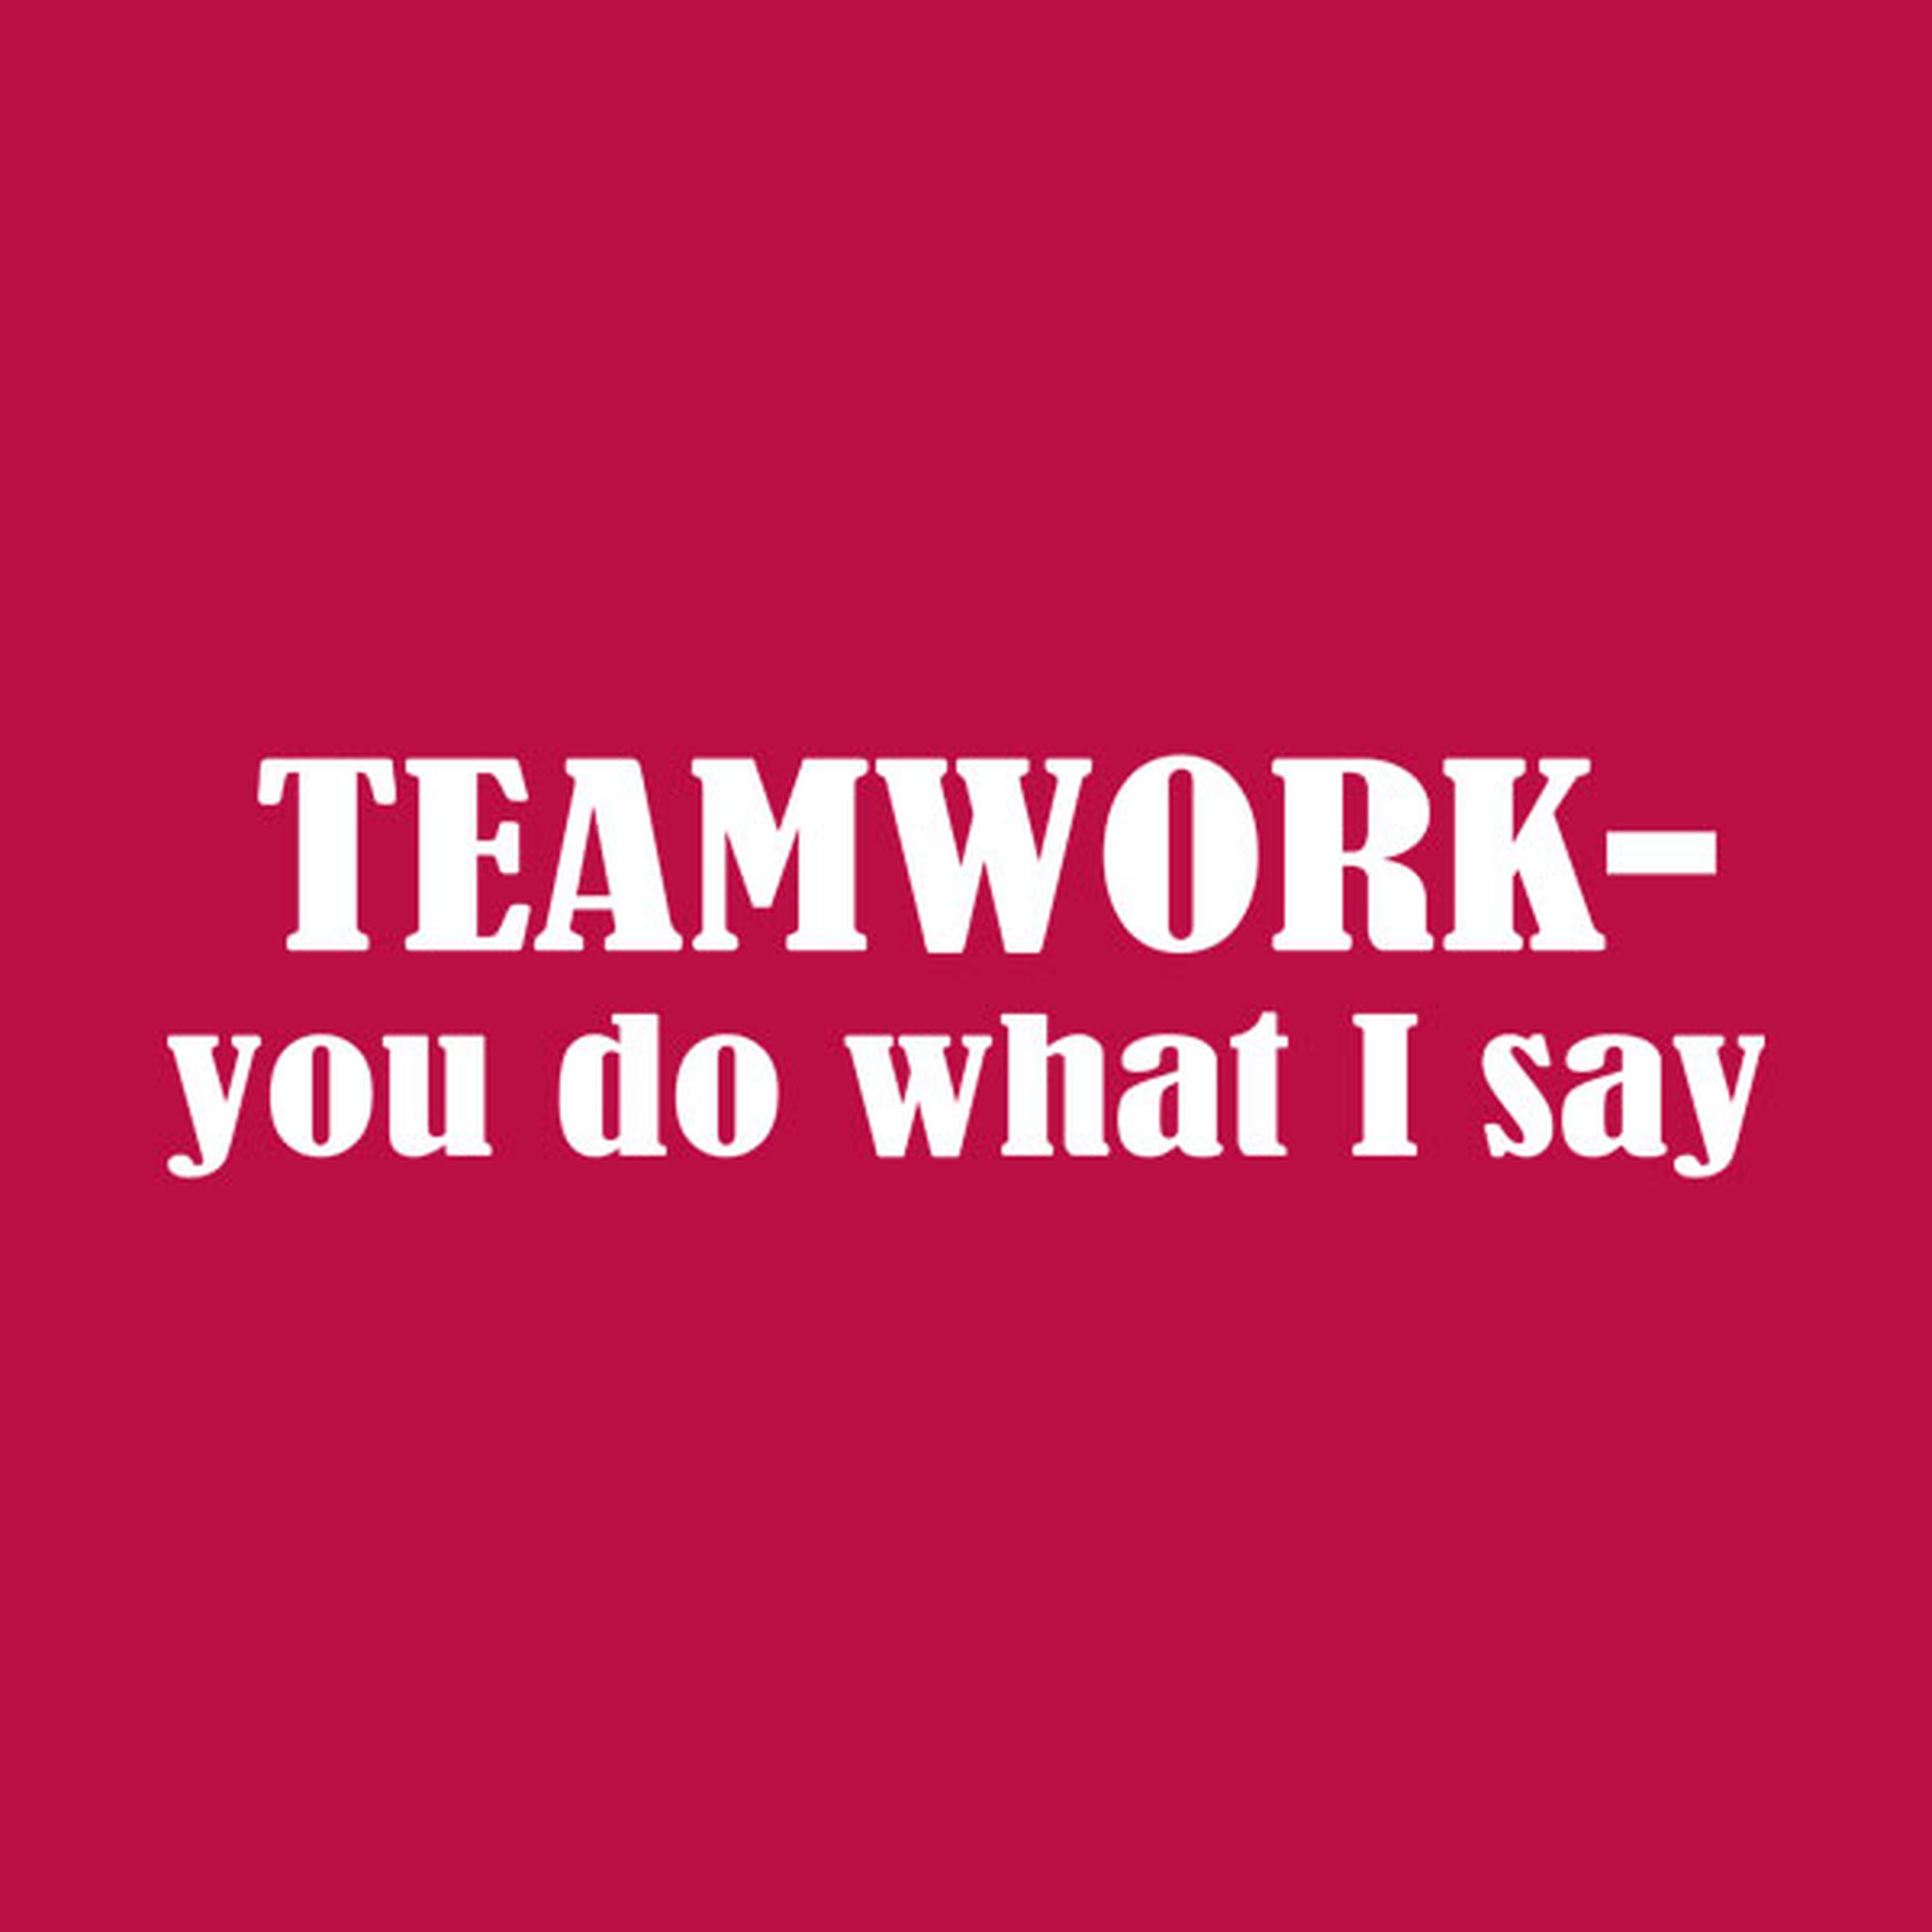 Teamwork - you do what I say - T-shirt